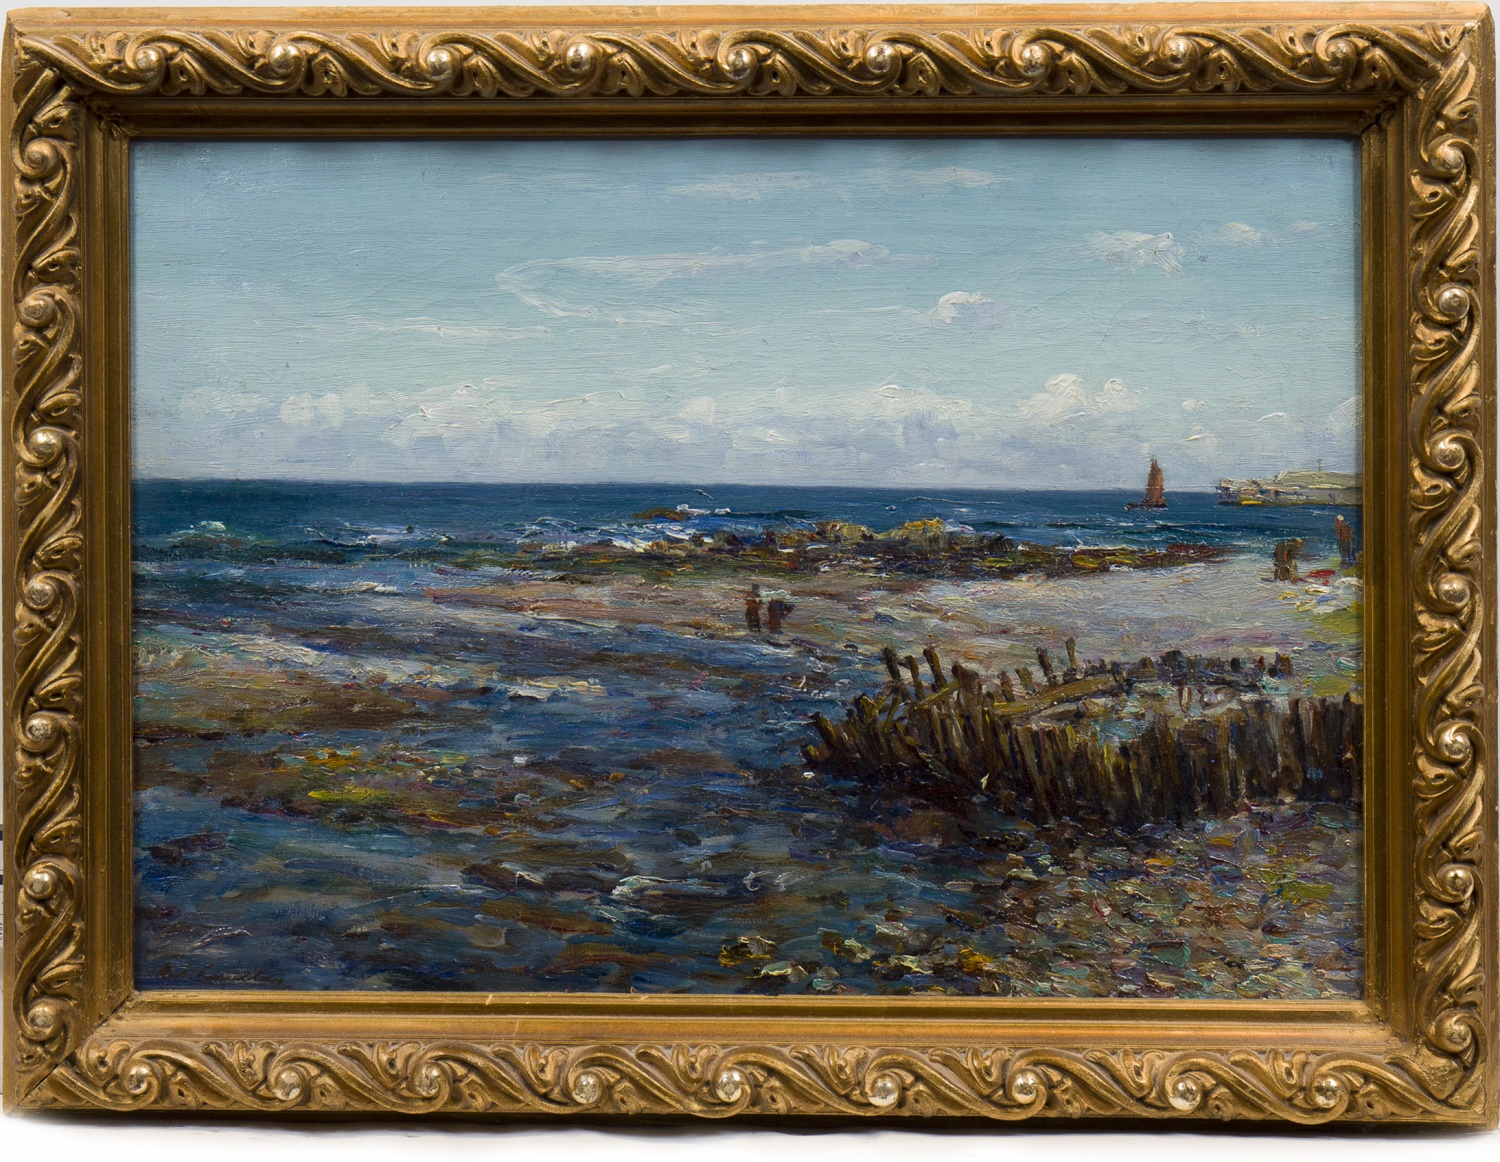 WILLIAM JAMES LAIDLAY (SCOTTISH 1846 - 1912), THE ARGYLLSHIRE COAST oil on canvas,